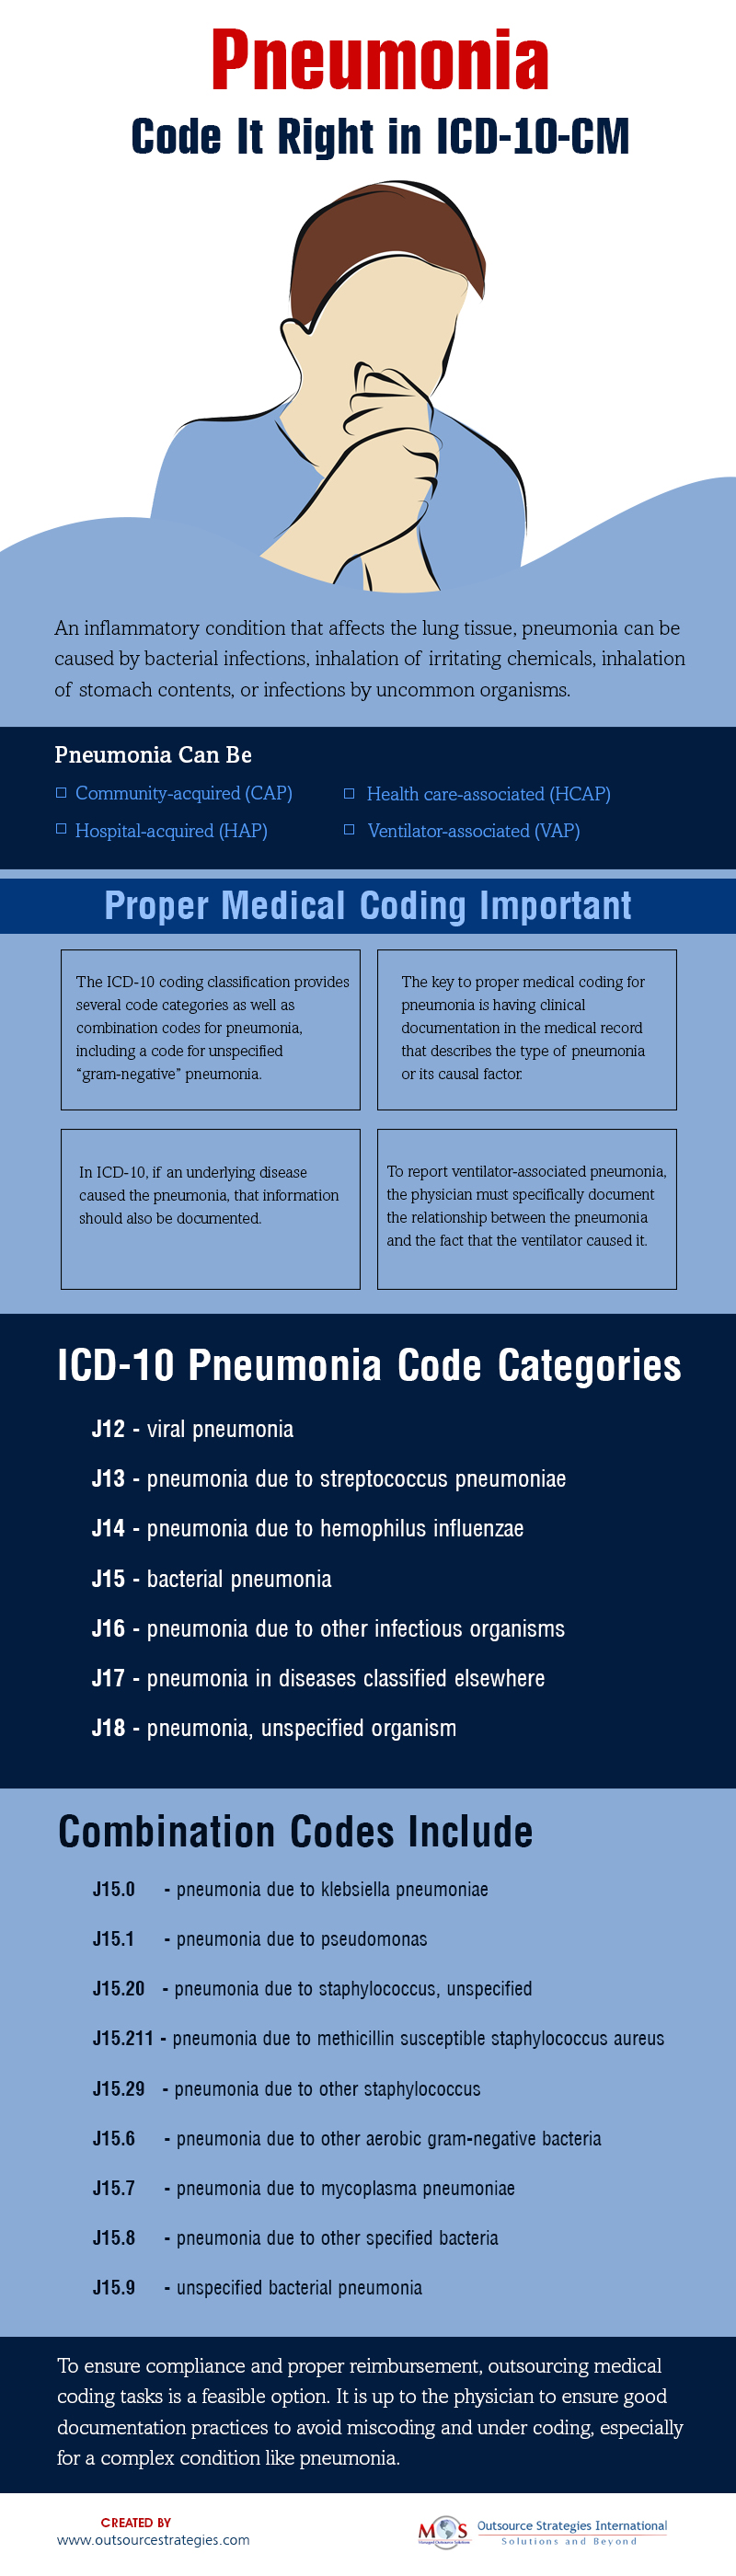 Pneumonia - Code It Right in ICD-10-CM